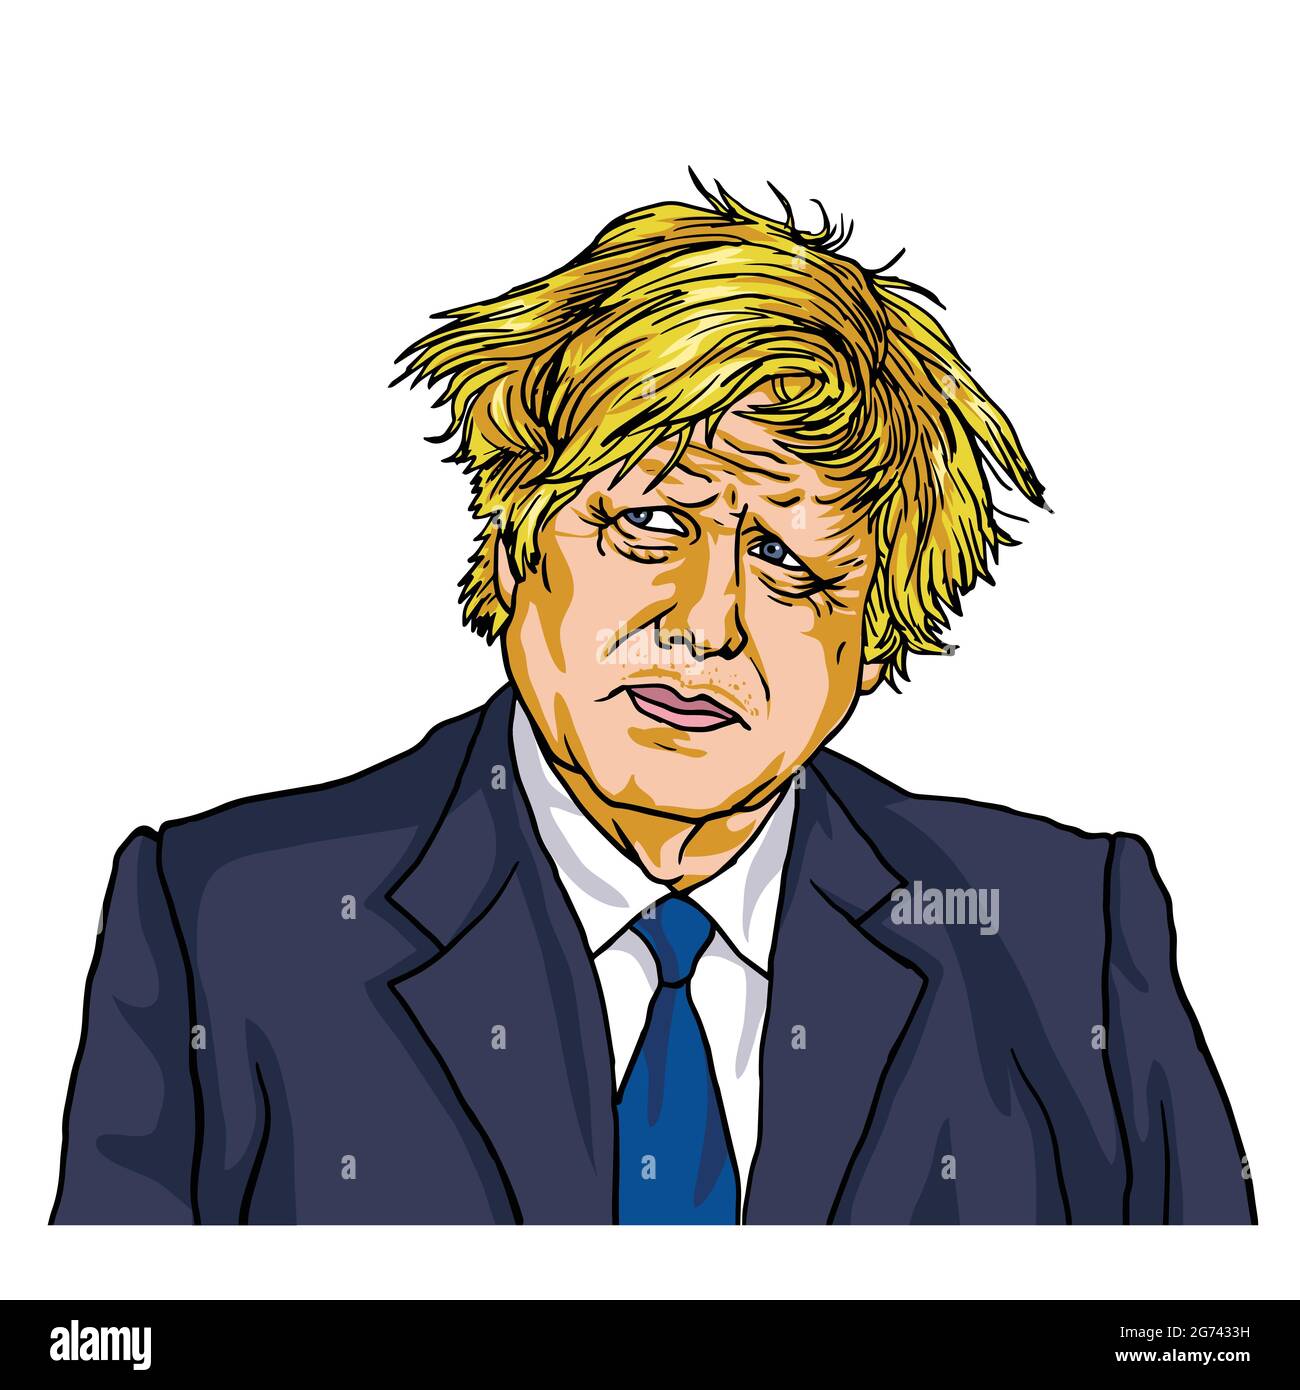 Boris Johnson, britischer Premierminister, Karikatur Vektorgrafik Zeichnung. London, 29. April 2021 Stock Vektor